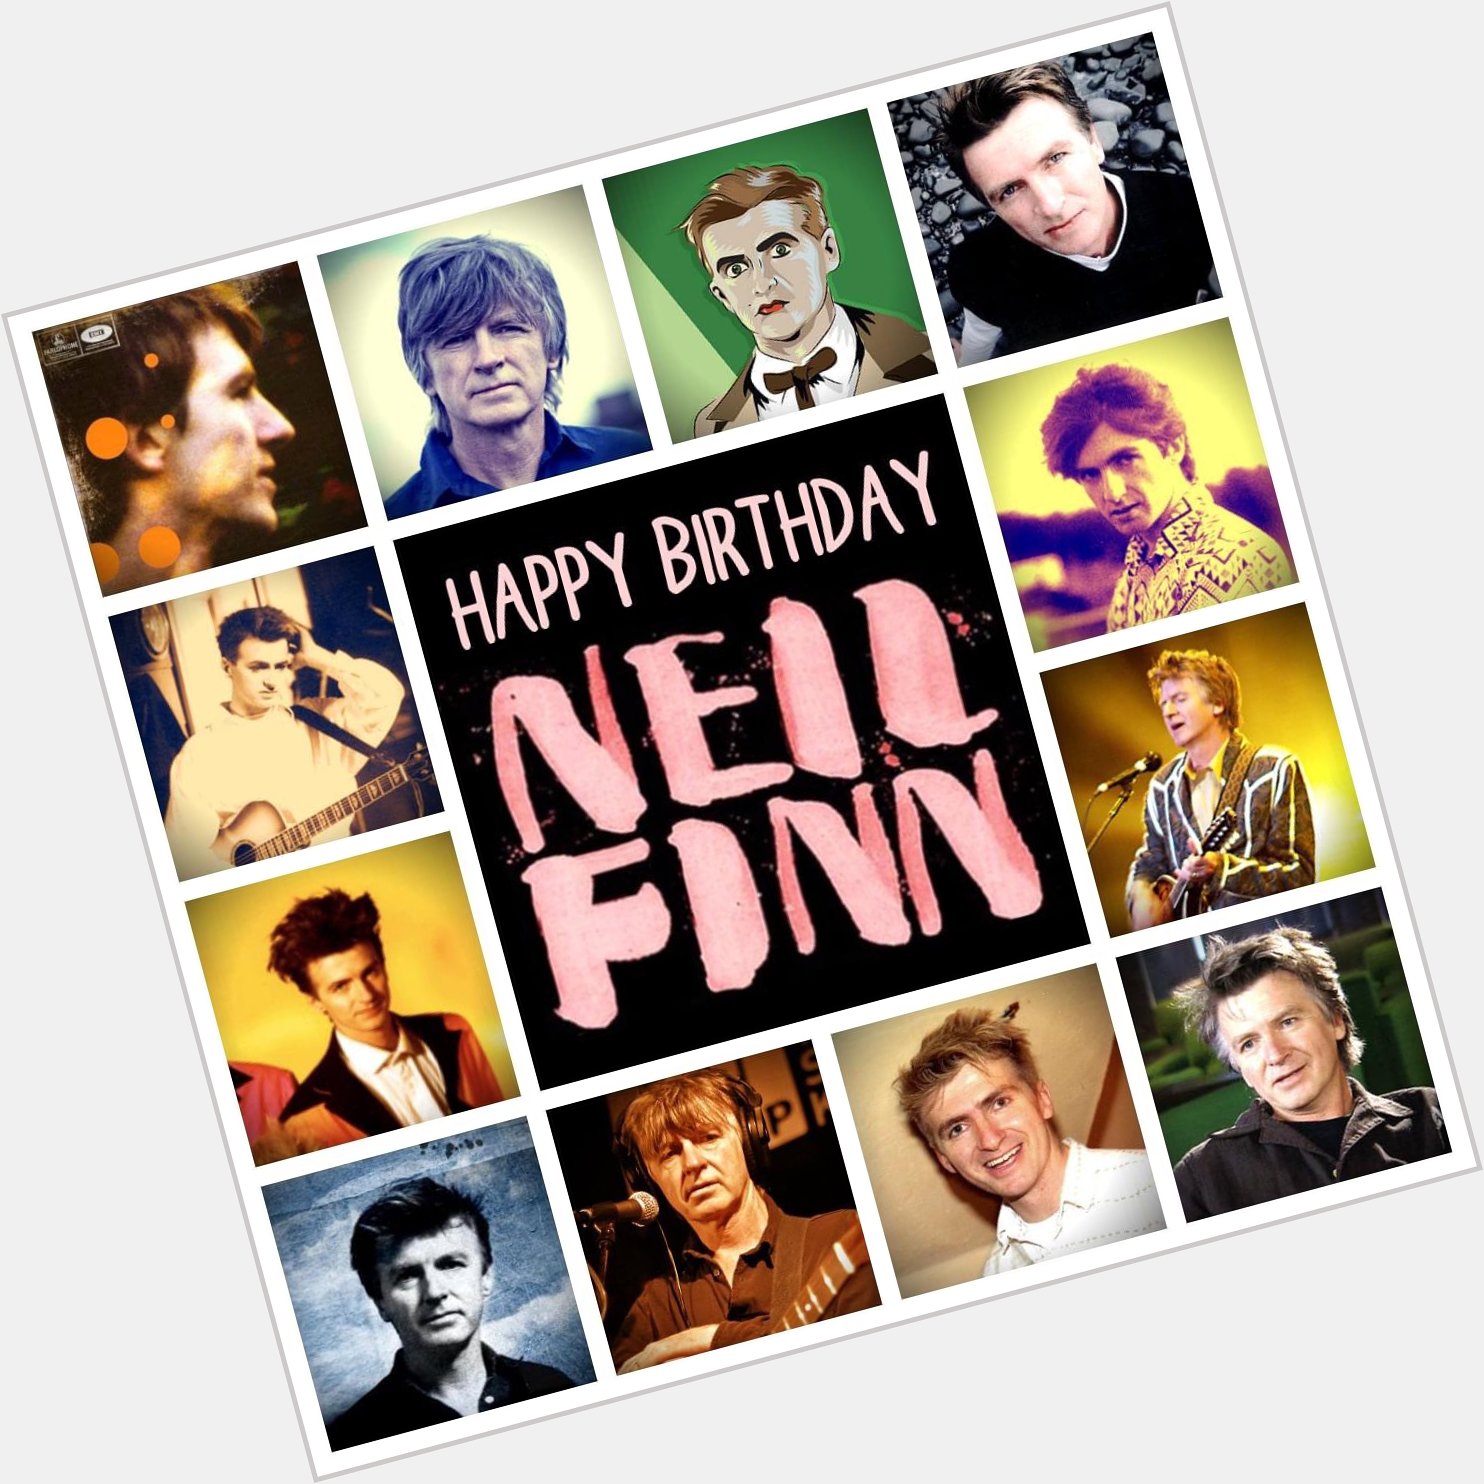 Happy birthday to crowded houses Neil Finn 